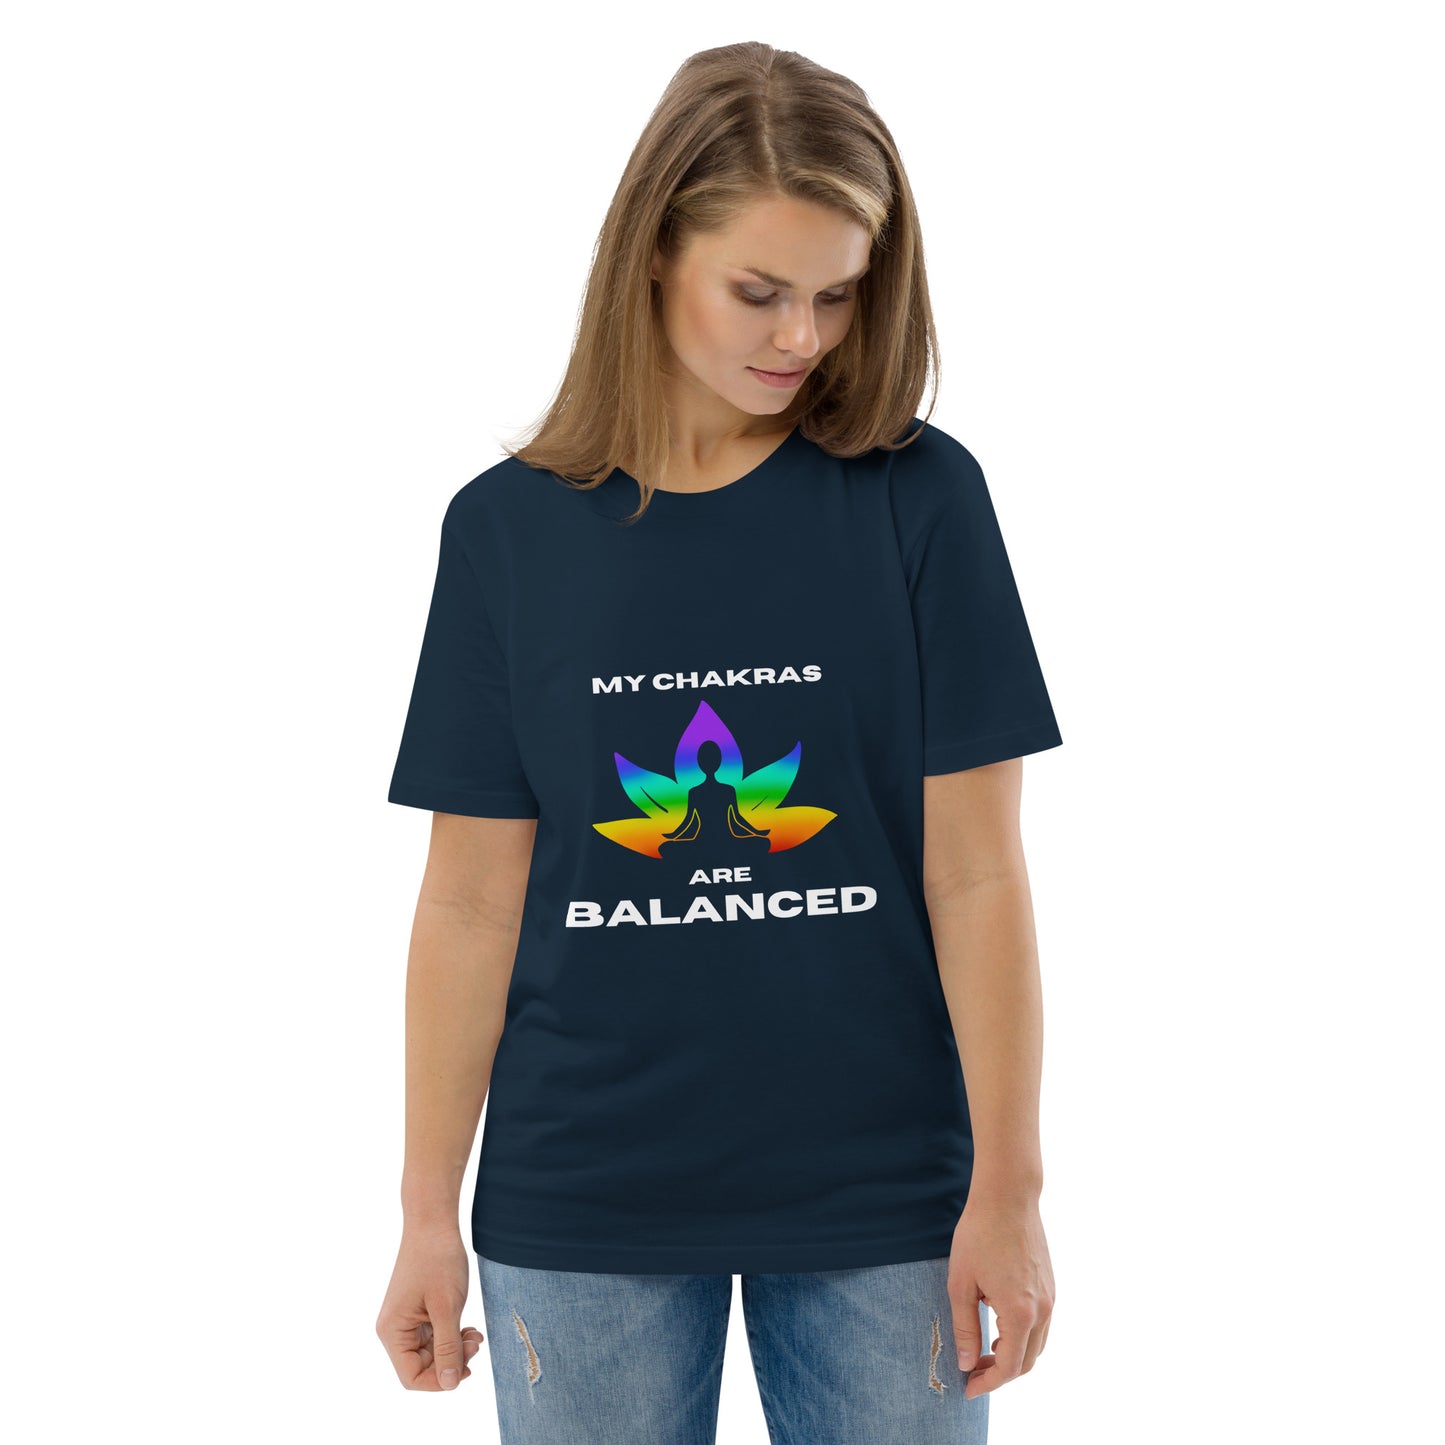 My chakras are balanced, t-shirt